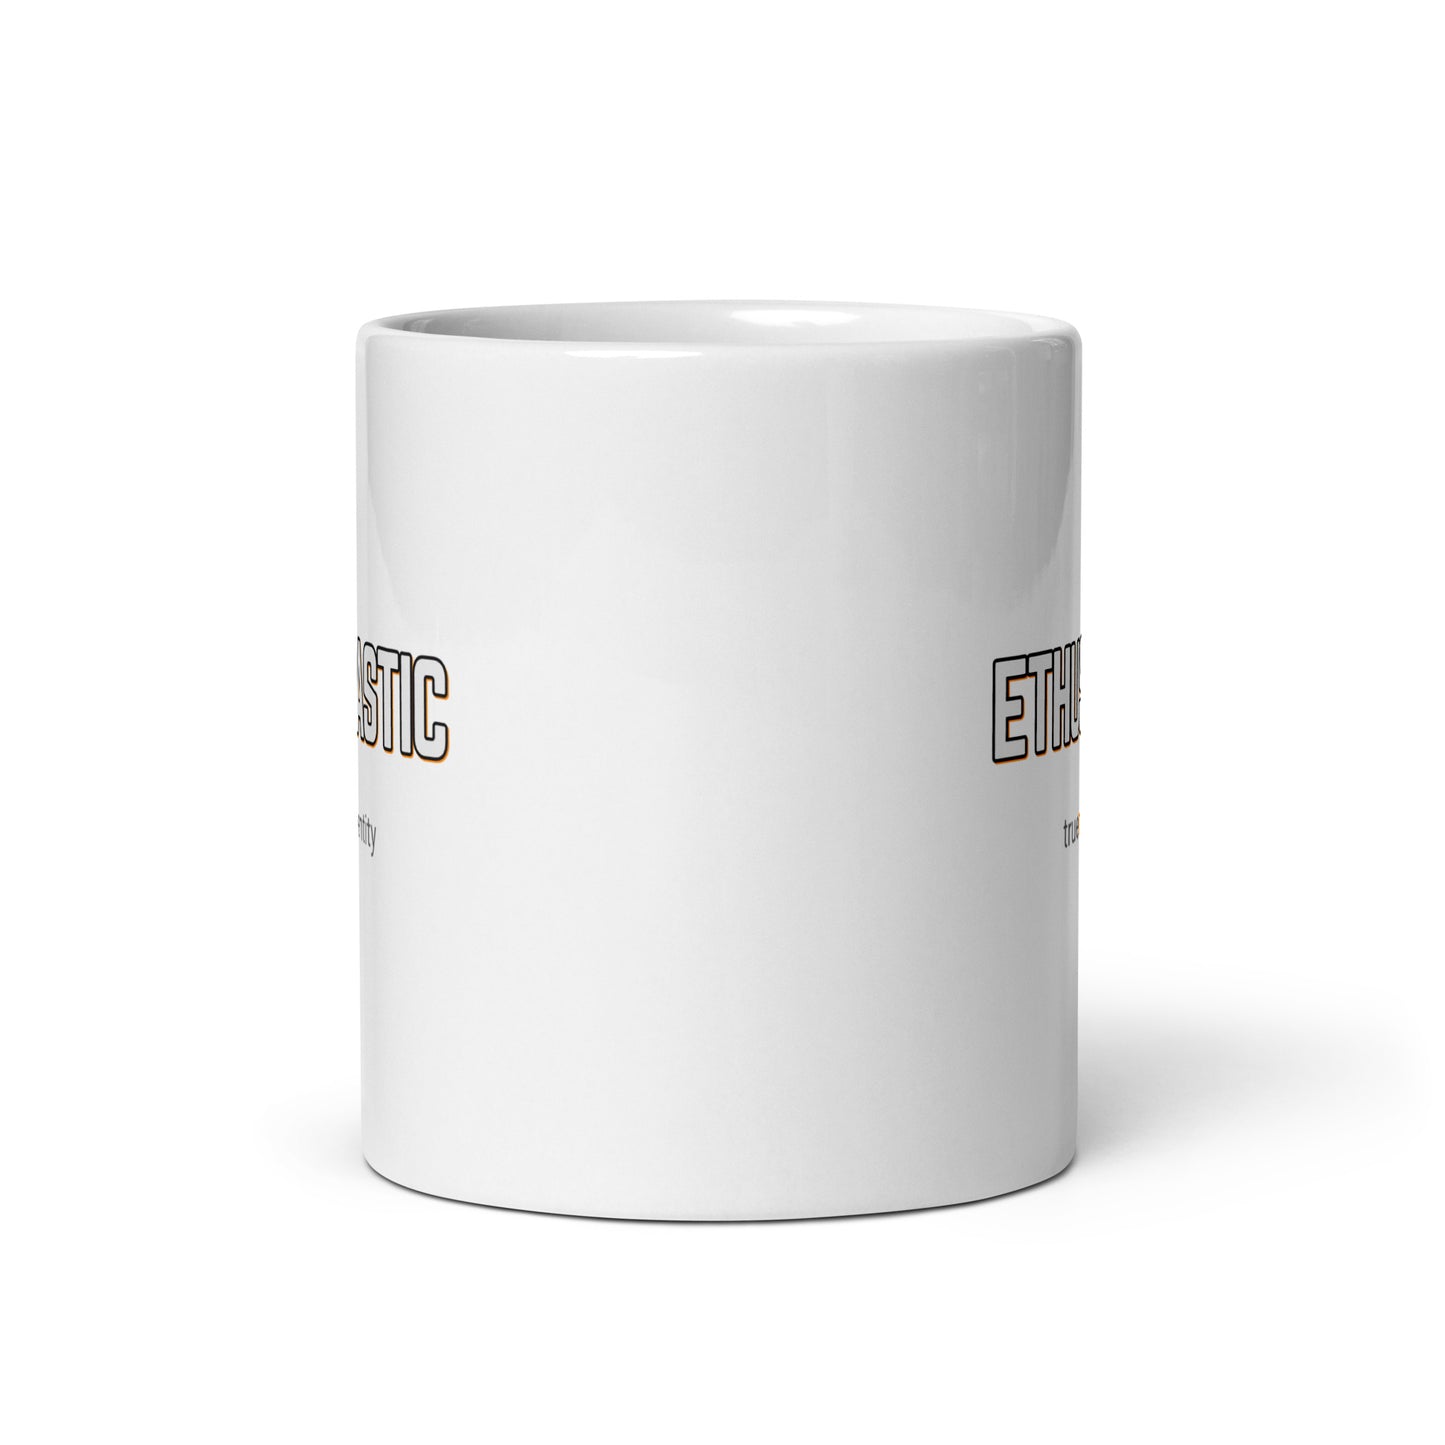 ENTHUSIASTIC White Coffee Mug Bold 11 oz or 15 oz